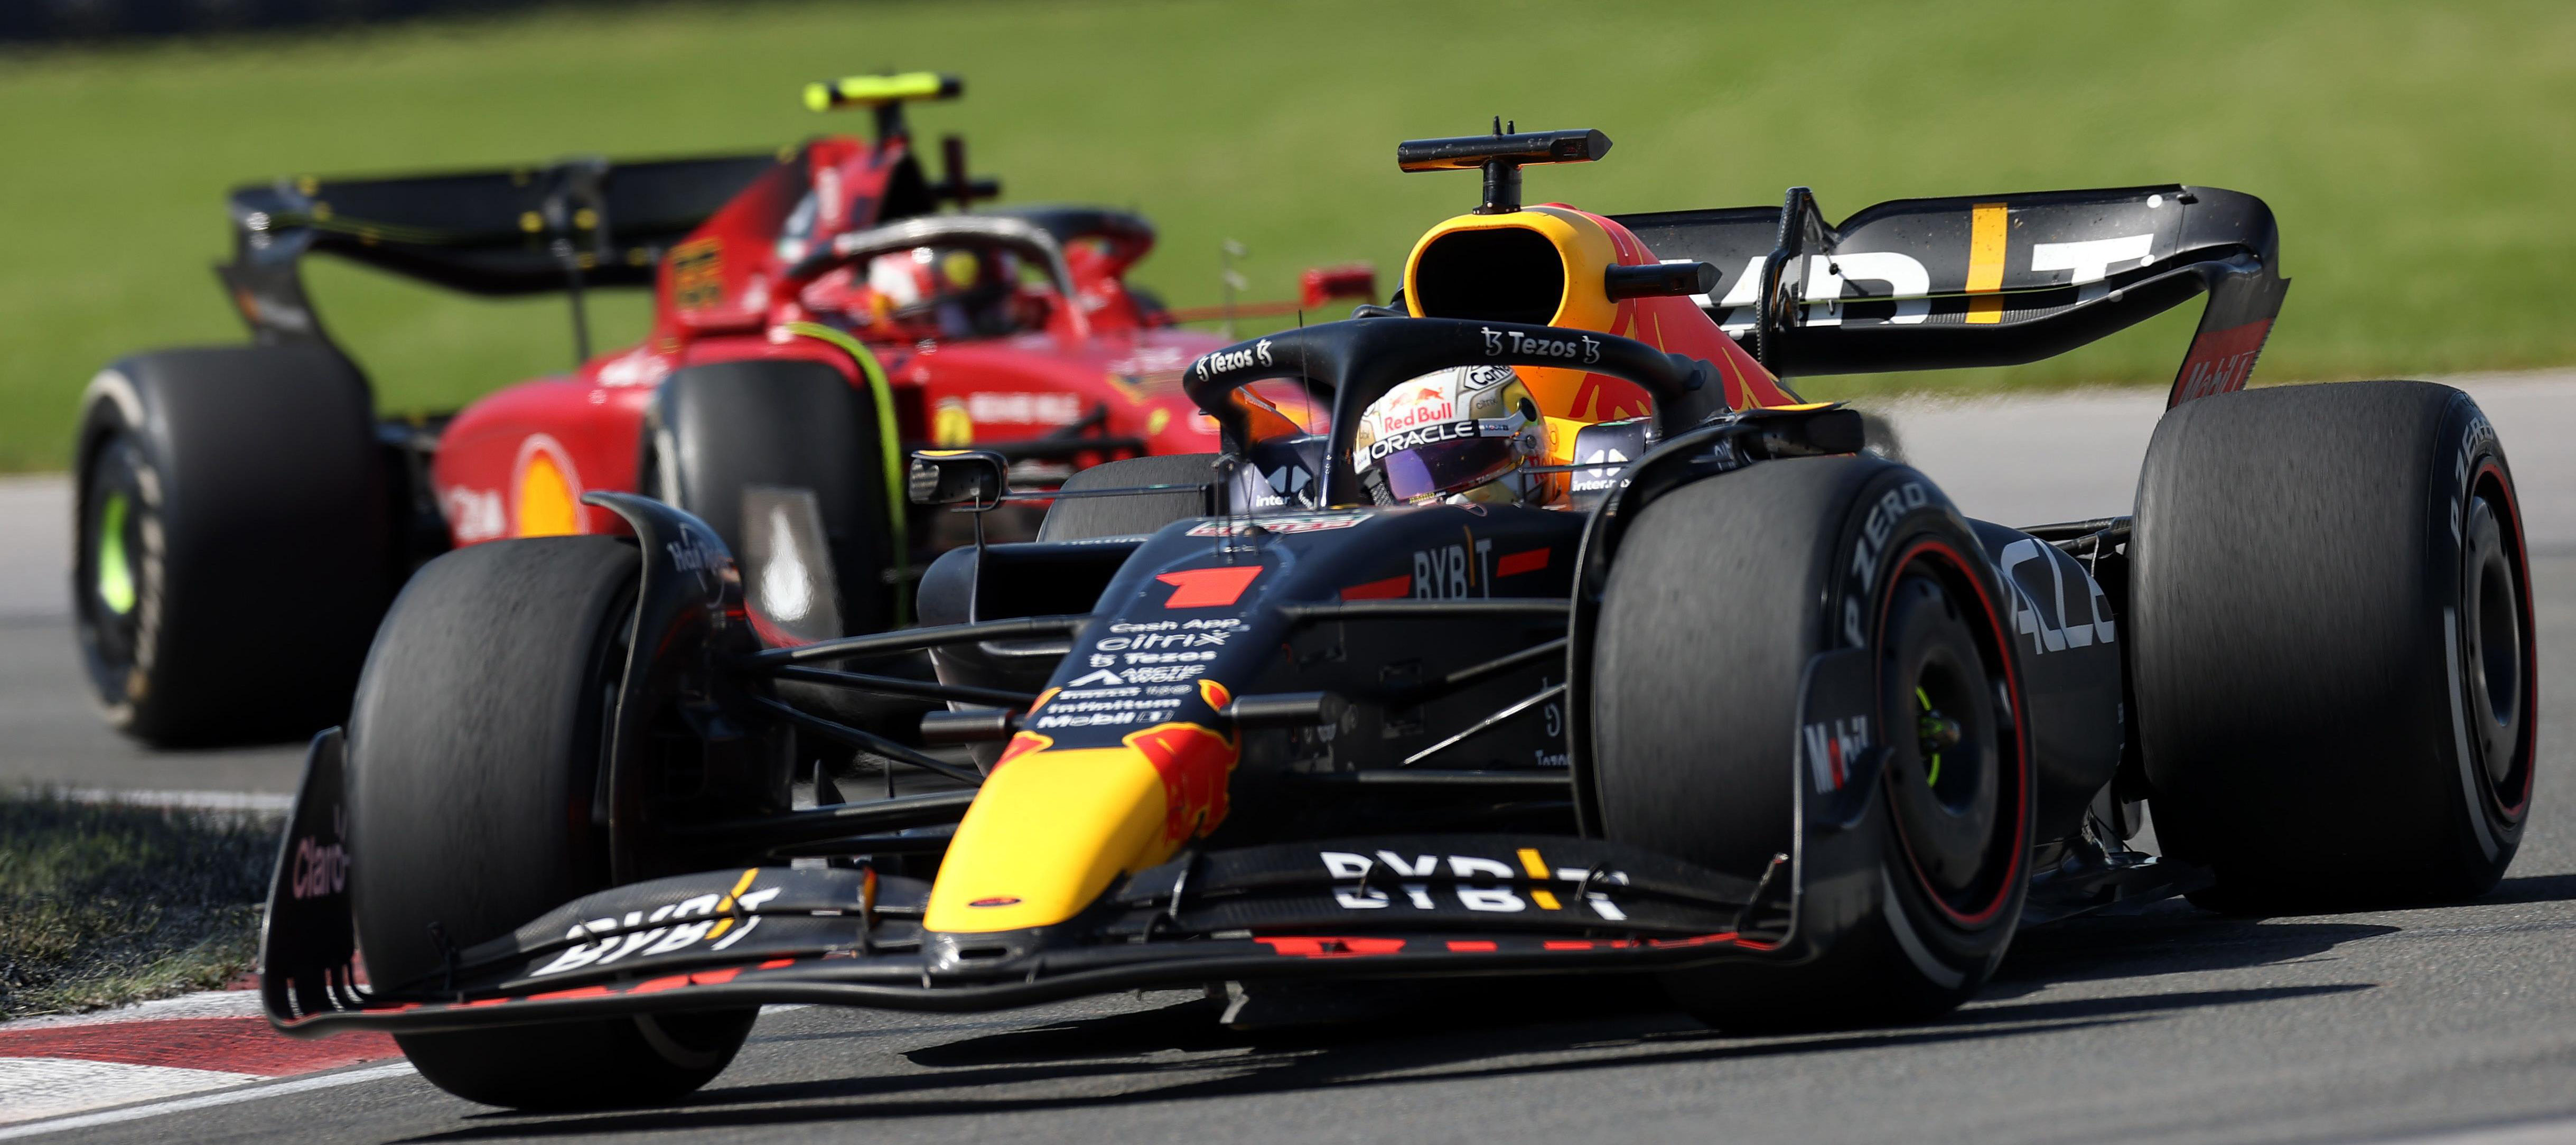 2022 Formula 1 Austrian Grand Prix Odds Favorites, Betting Analysis and Picks